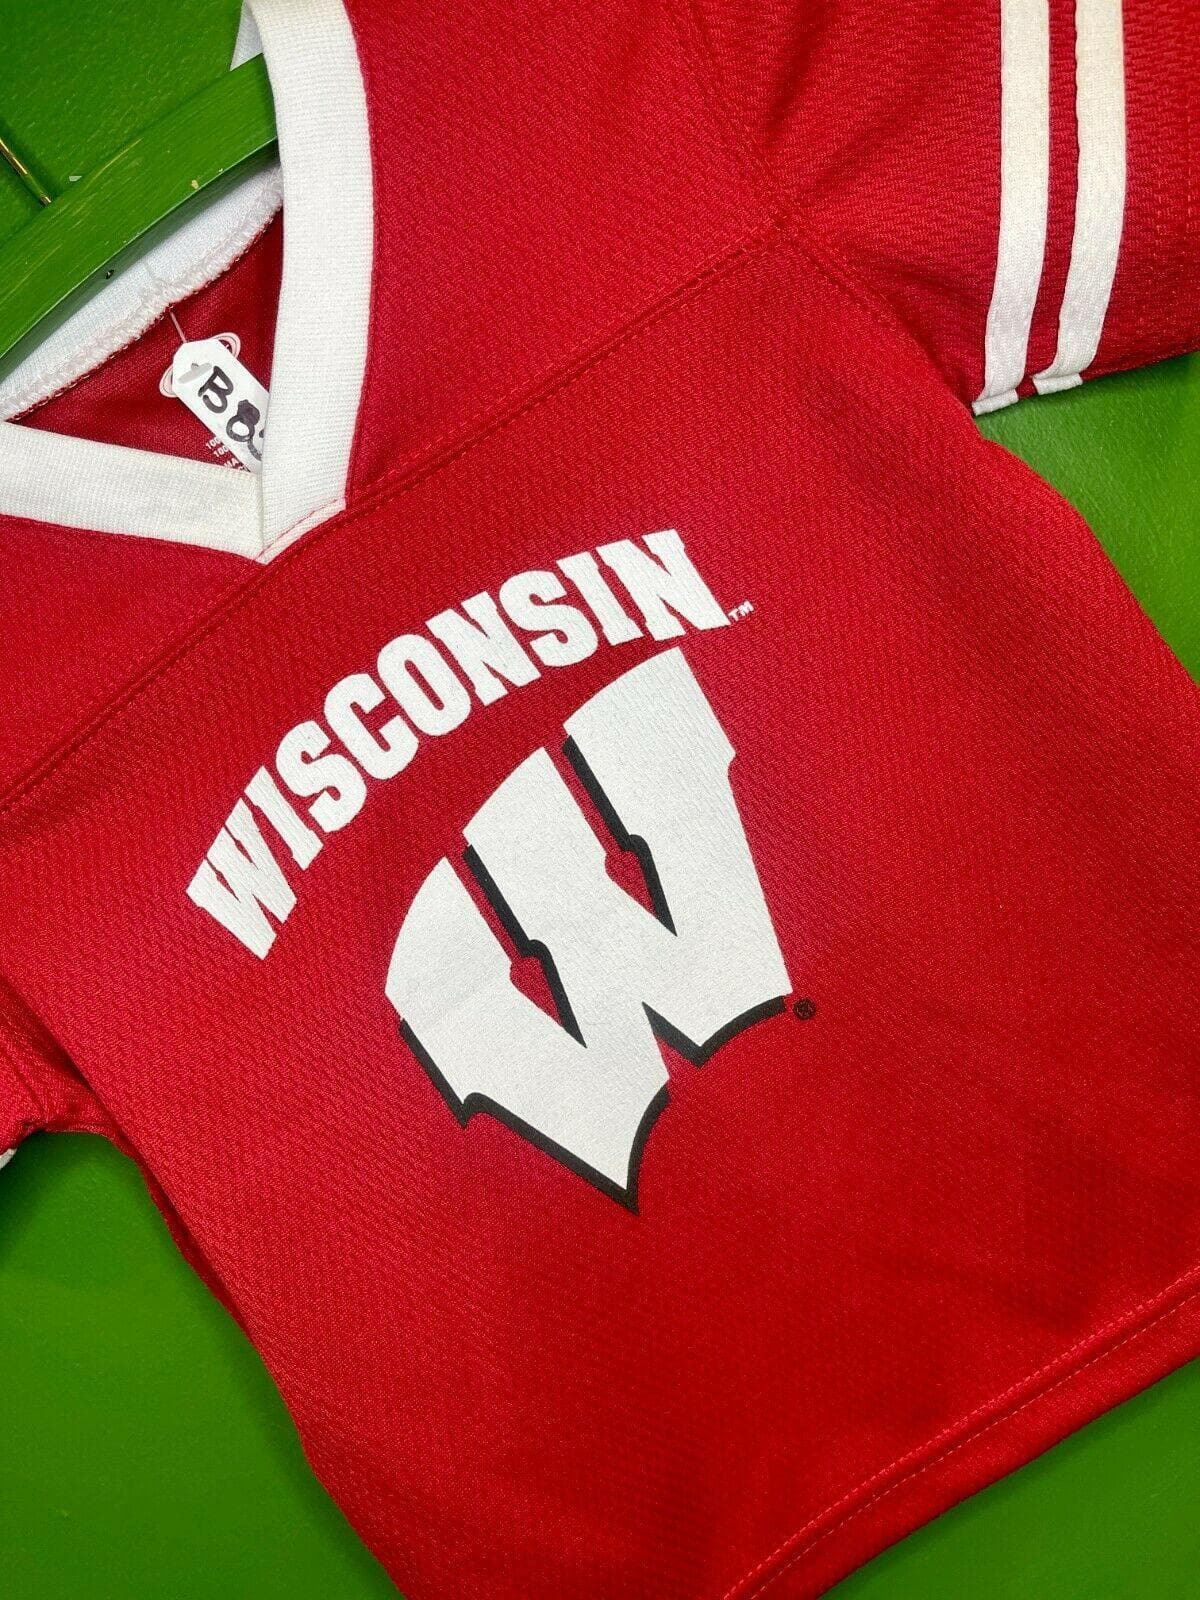 NCAA Wisconsin Badgers Team Athletics Jersey 2T NWT